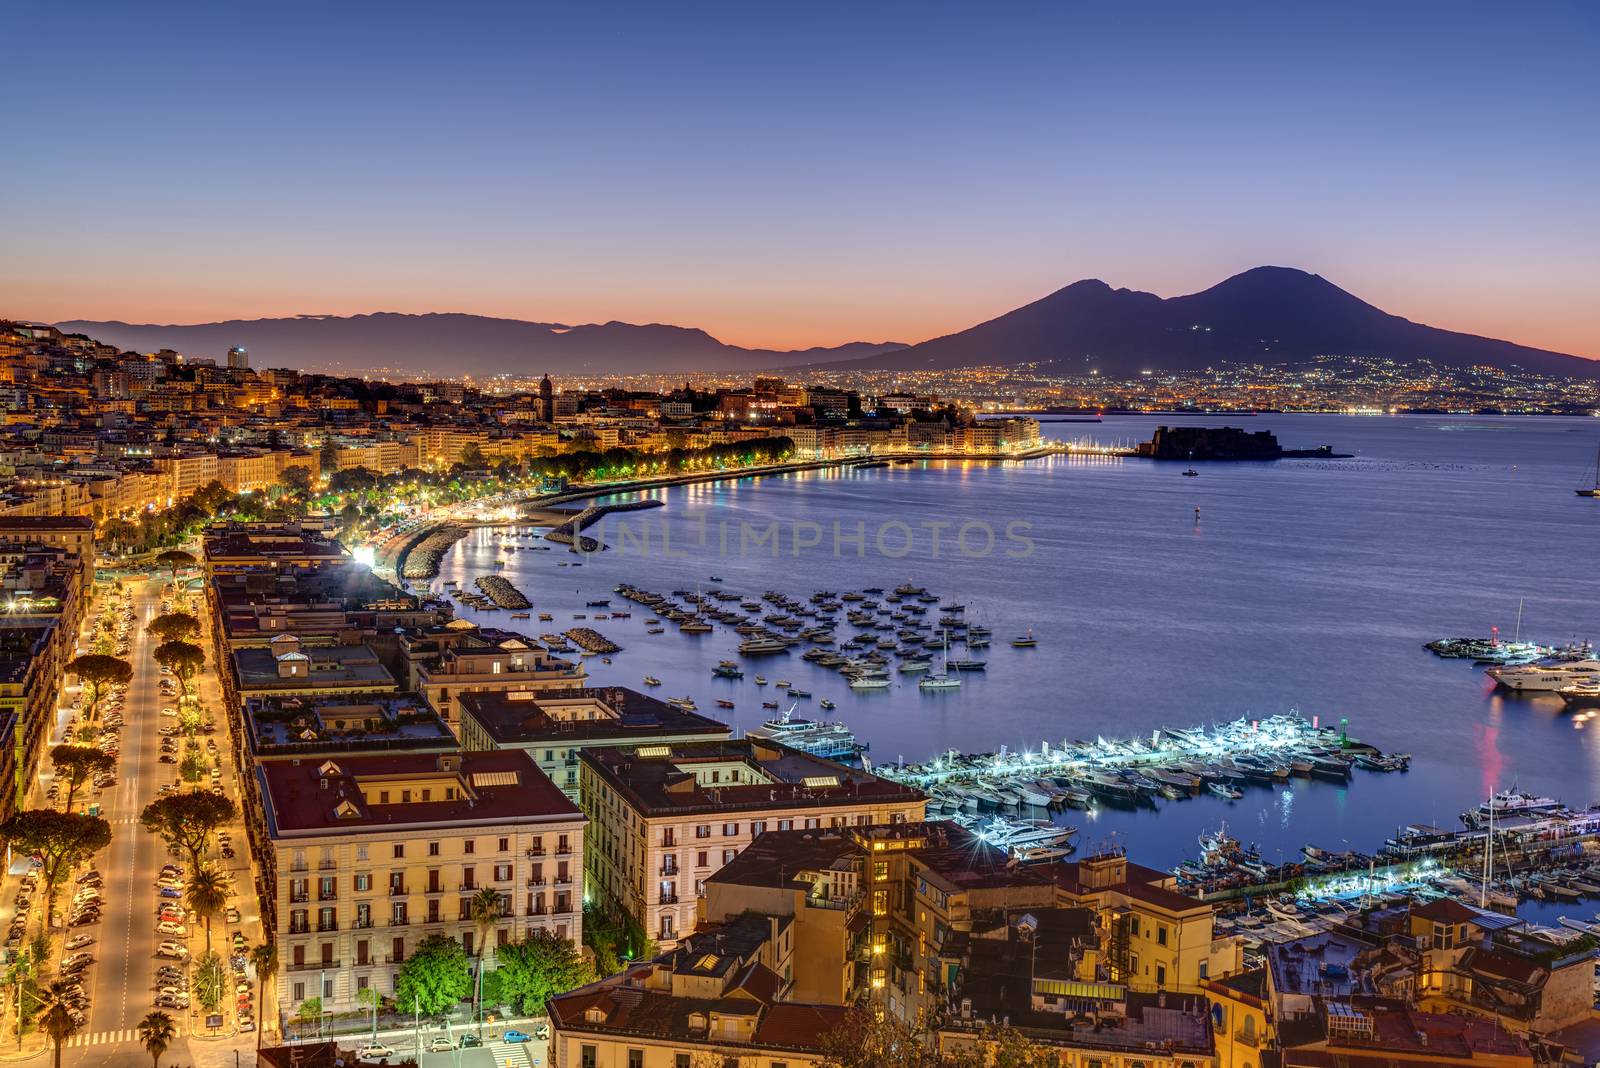 Naples and Mount Vesuvius in Italy before sunrise